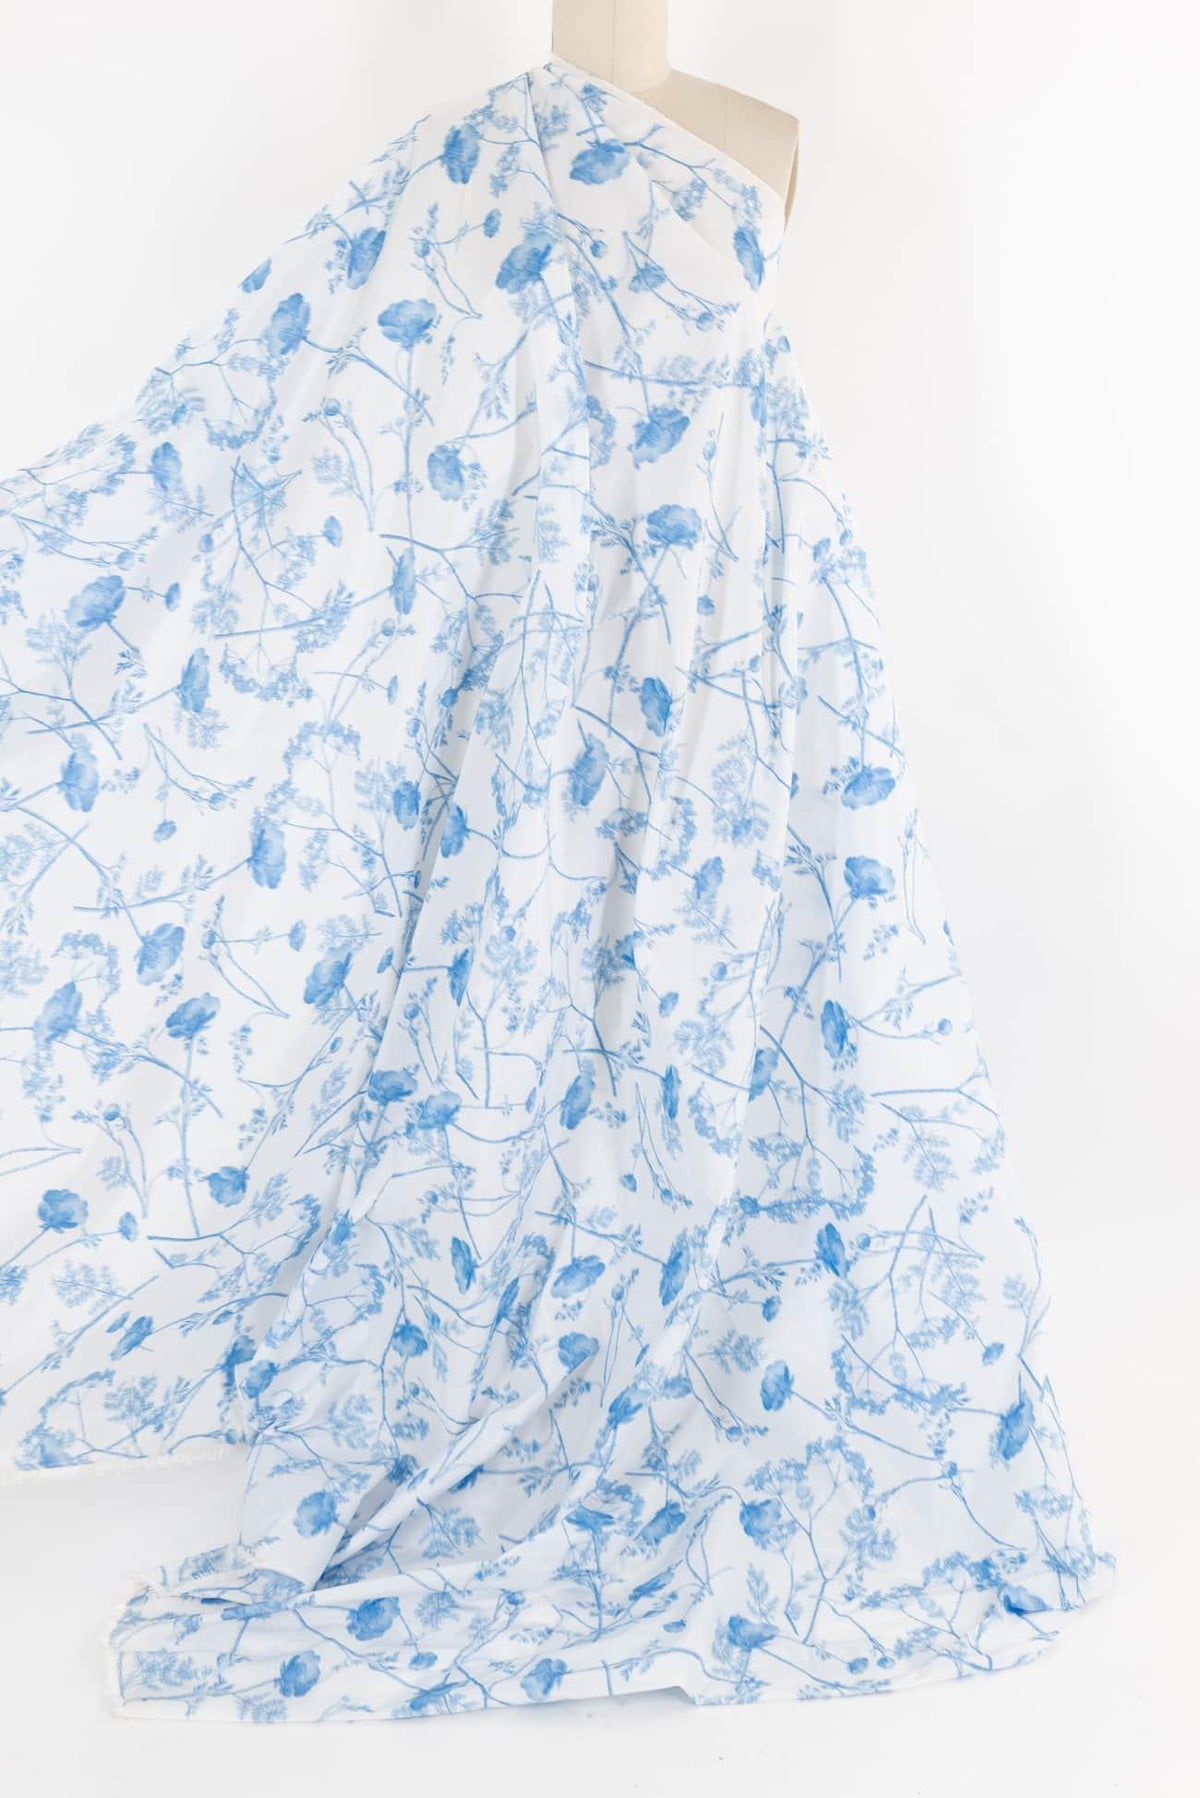 Blue Mist Silk Ikat Blend Woven - Marcy Tilton Fabrics